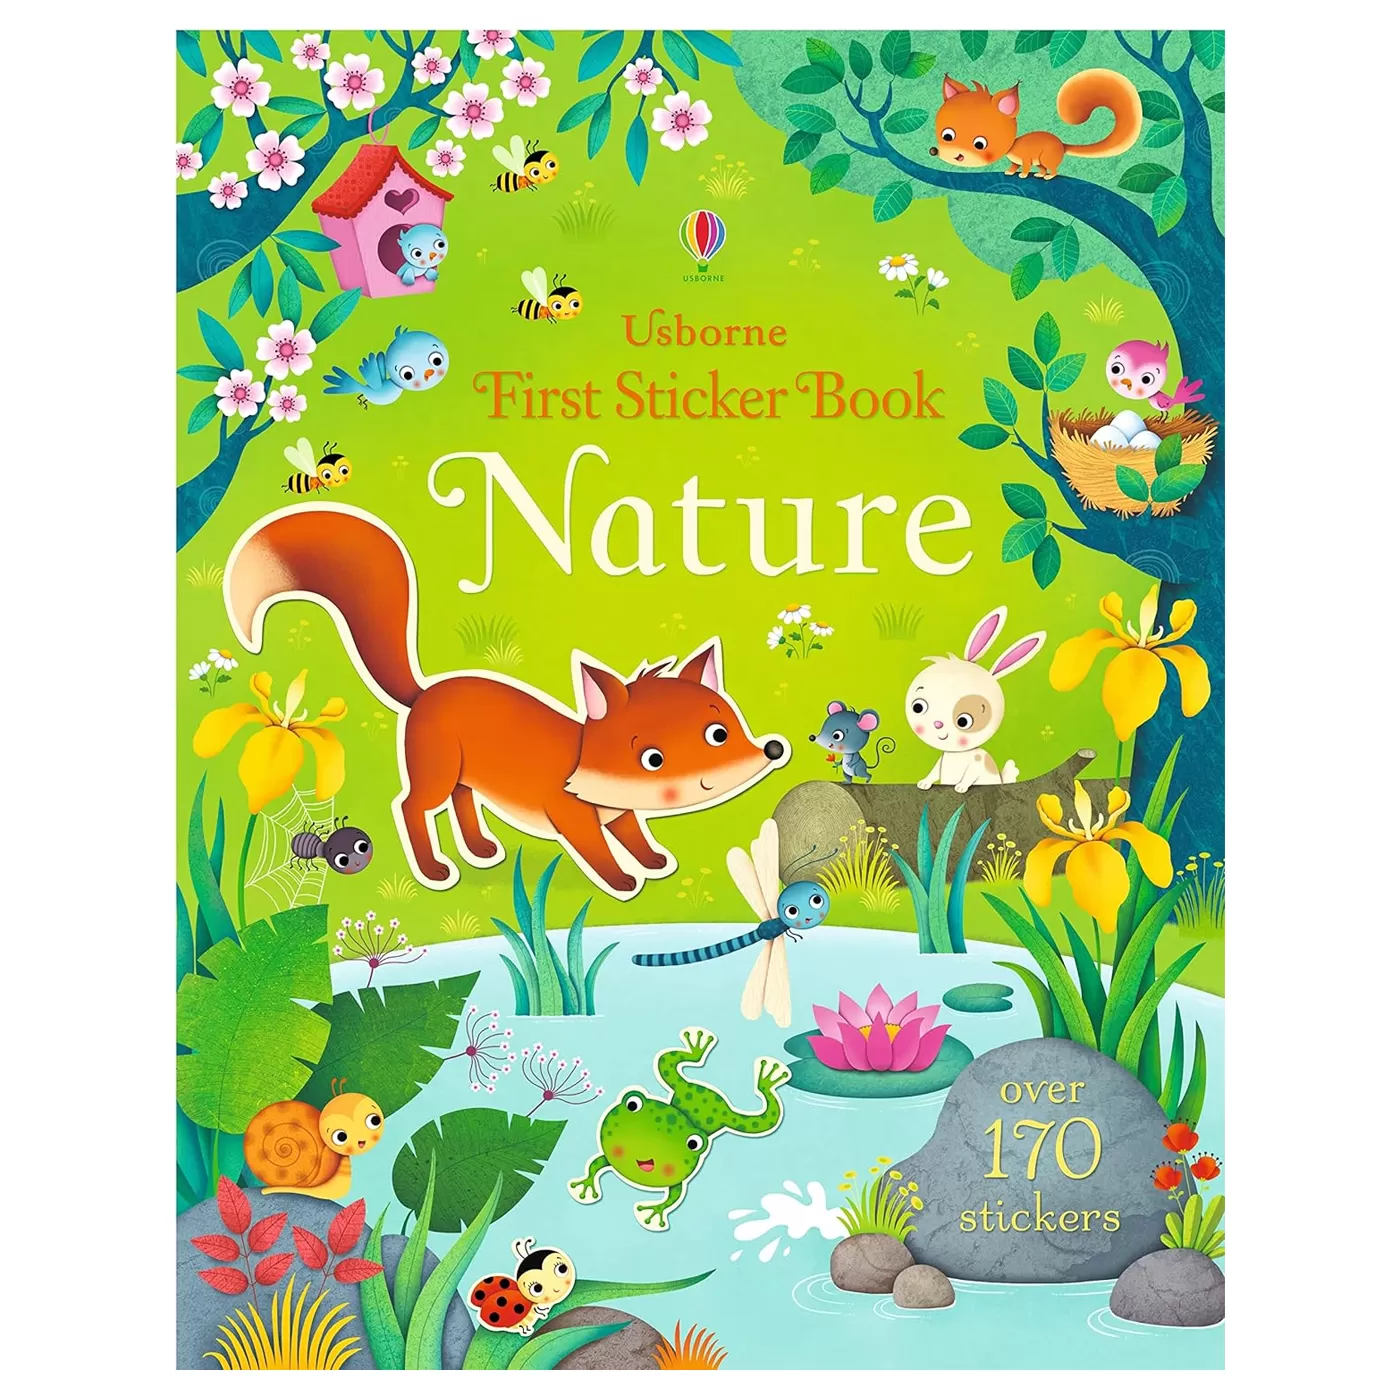  First Sticker Book Nature